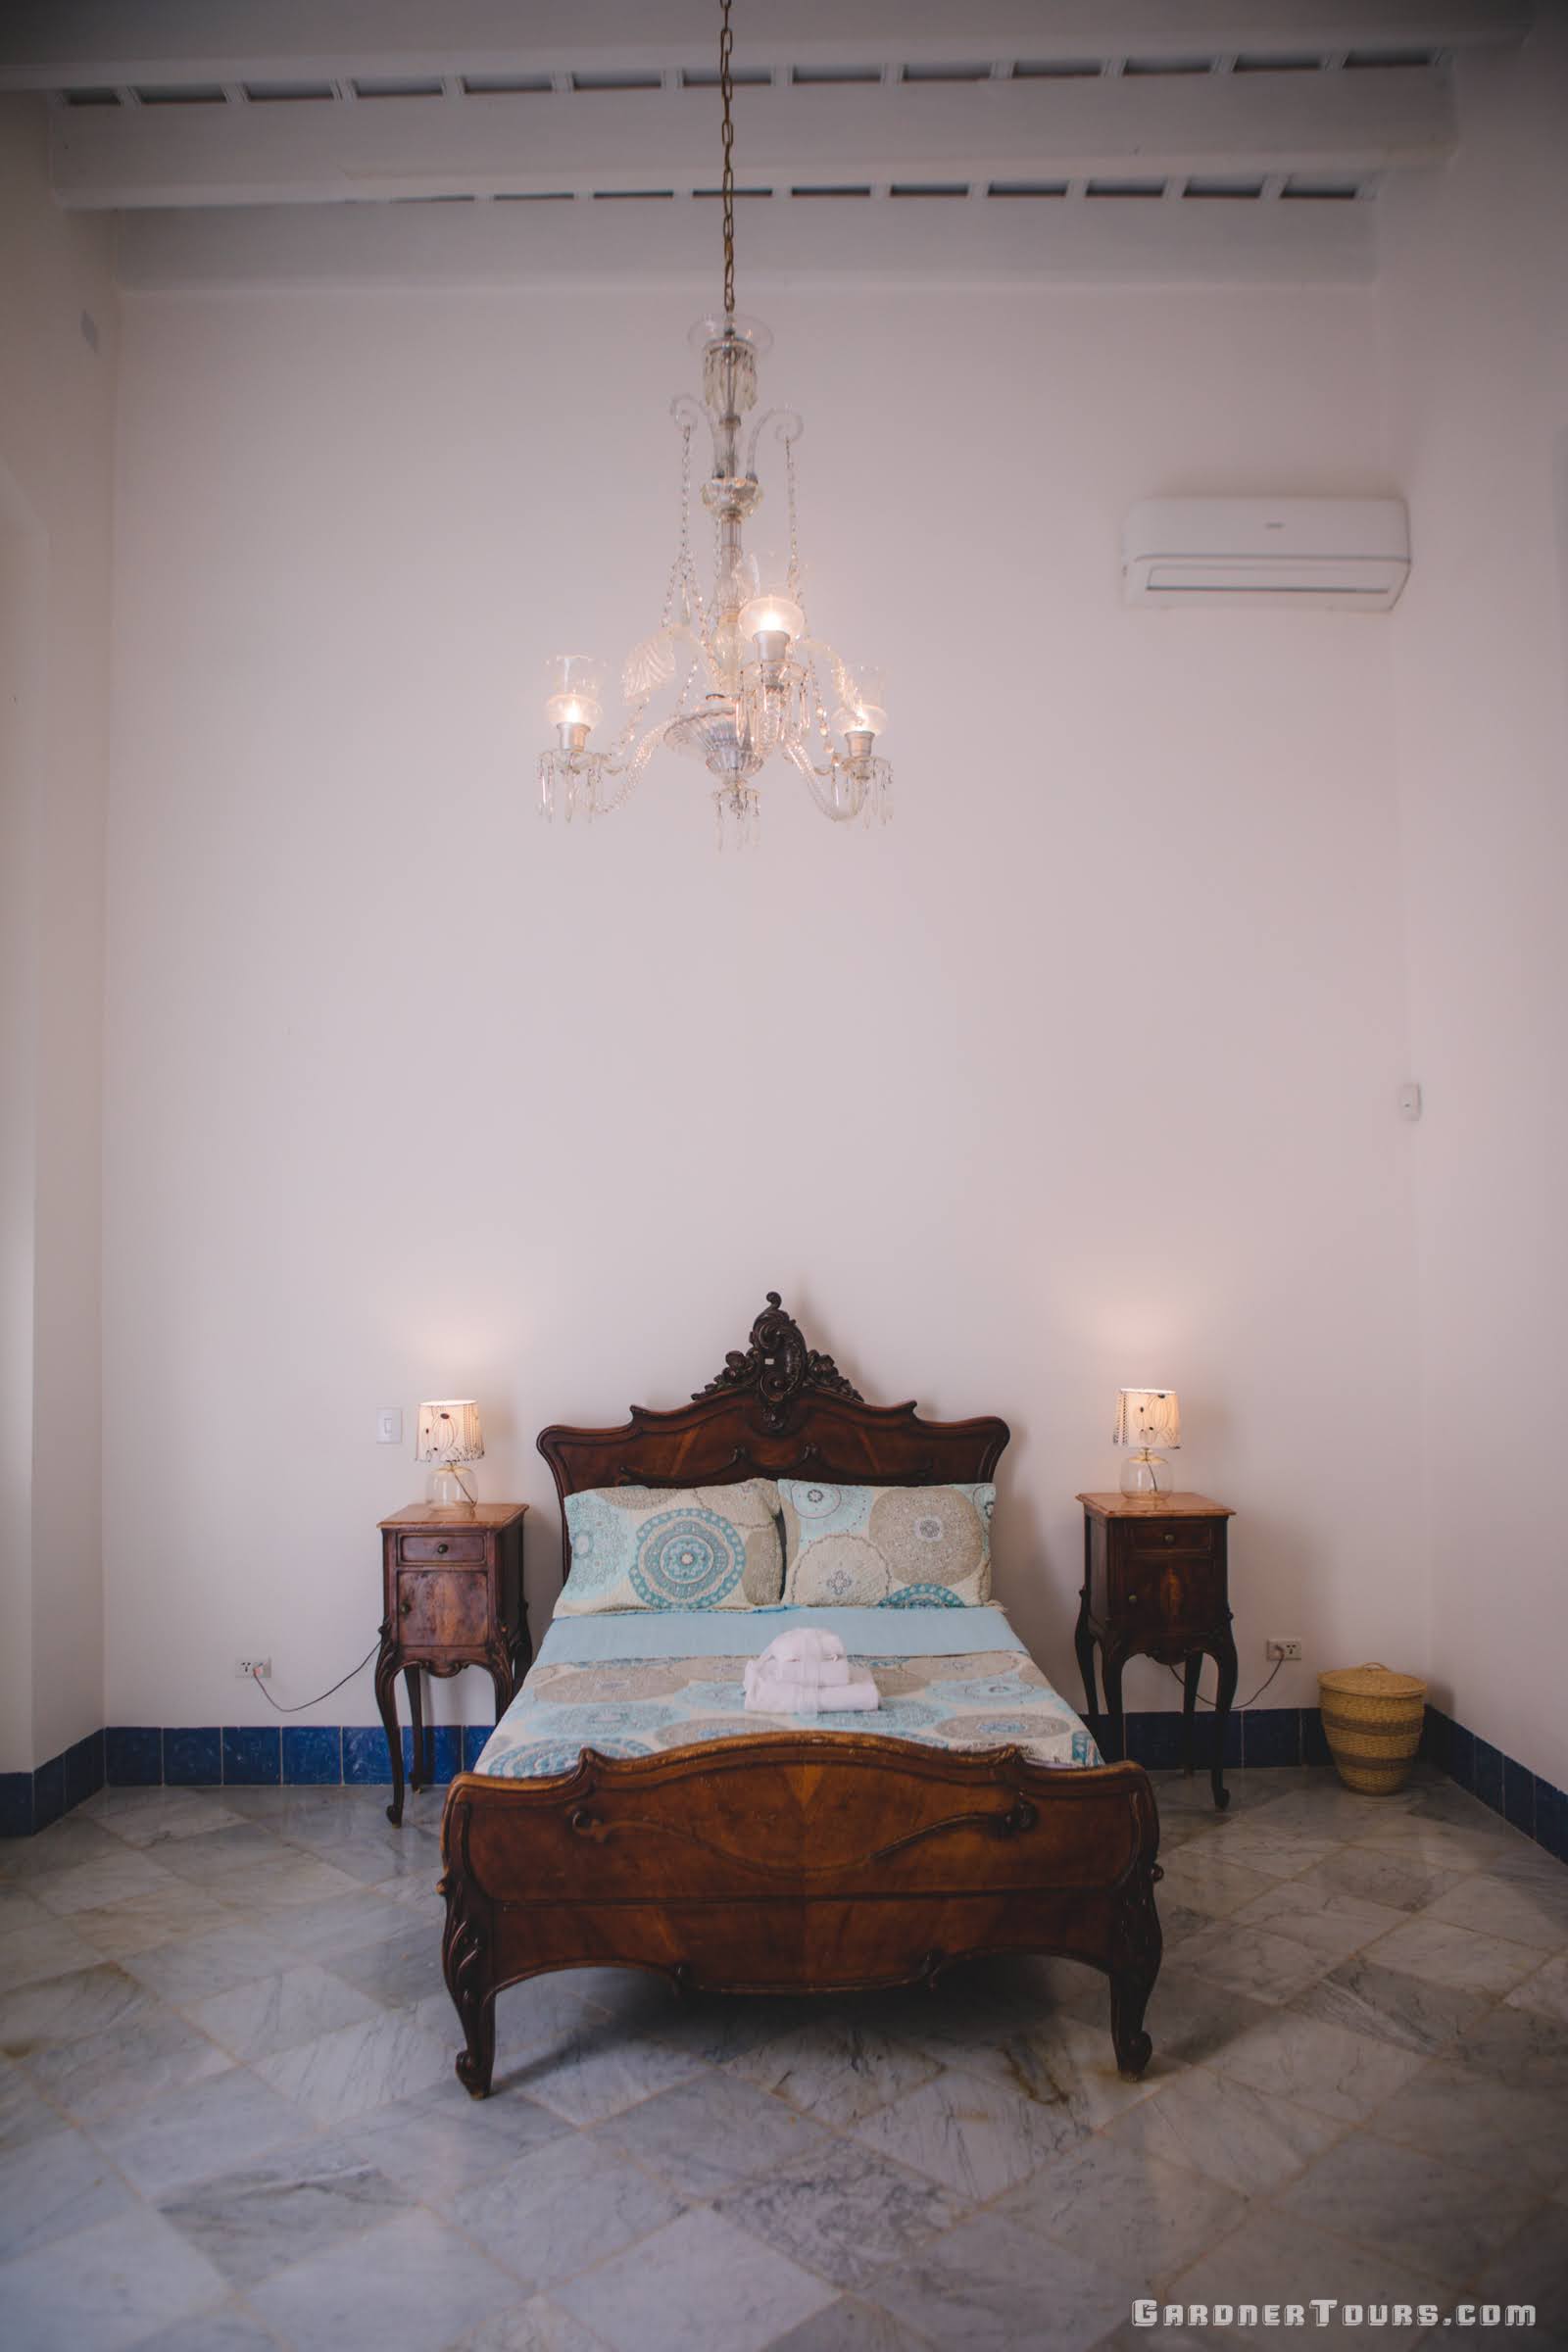 Original Room Layout of Bedroom at Accommodations in Havana, Cuba